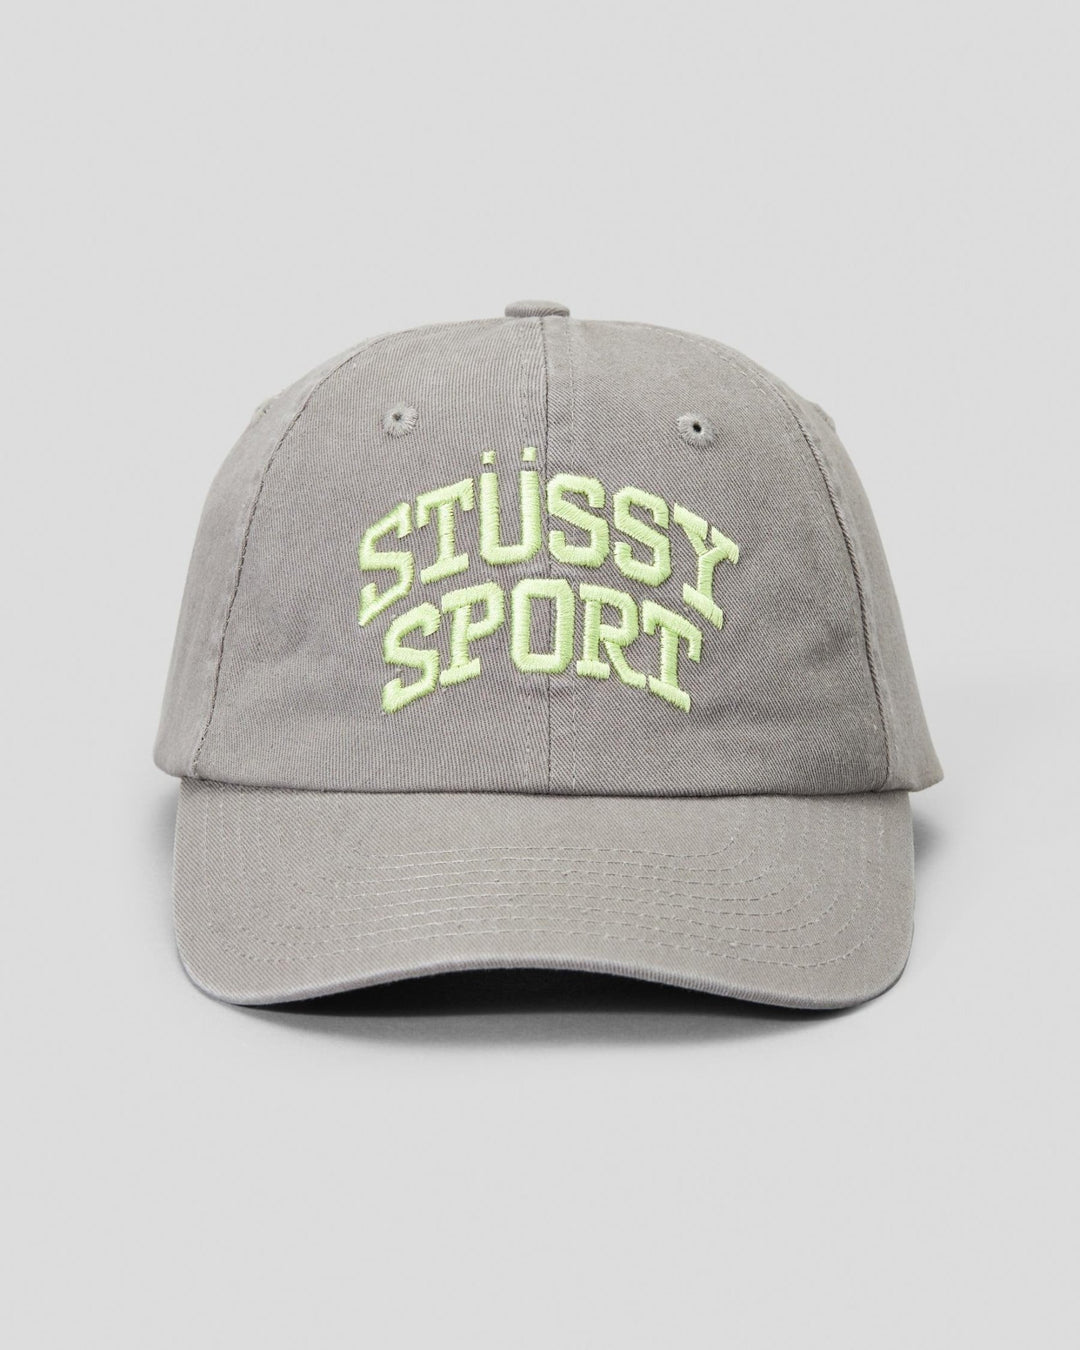 Stussy Sport Low Pro Cap - Grey - Chillis & More NZ